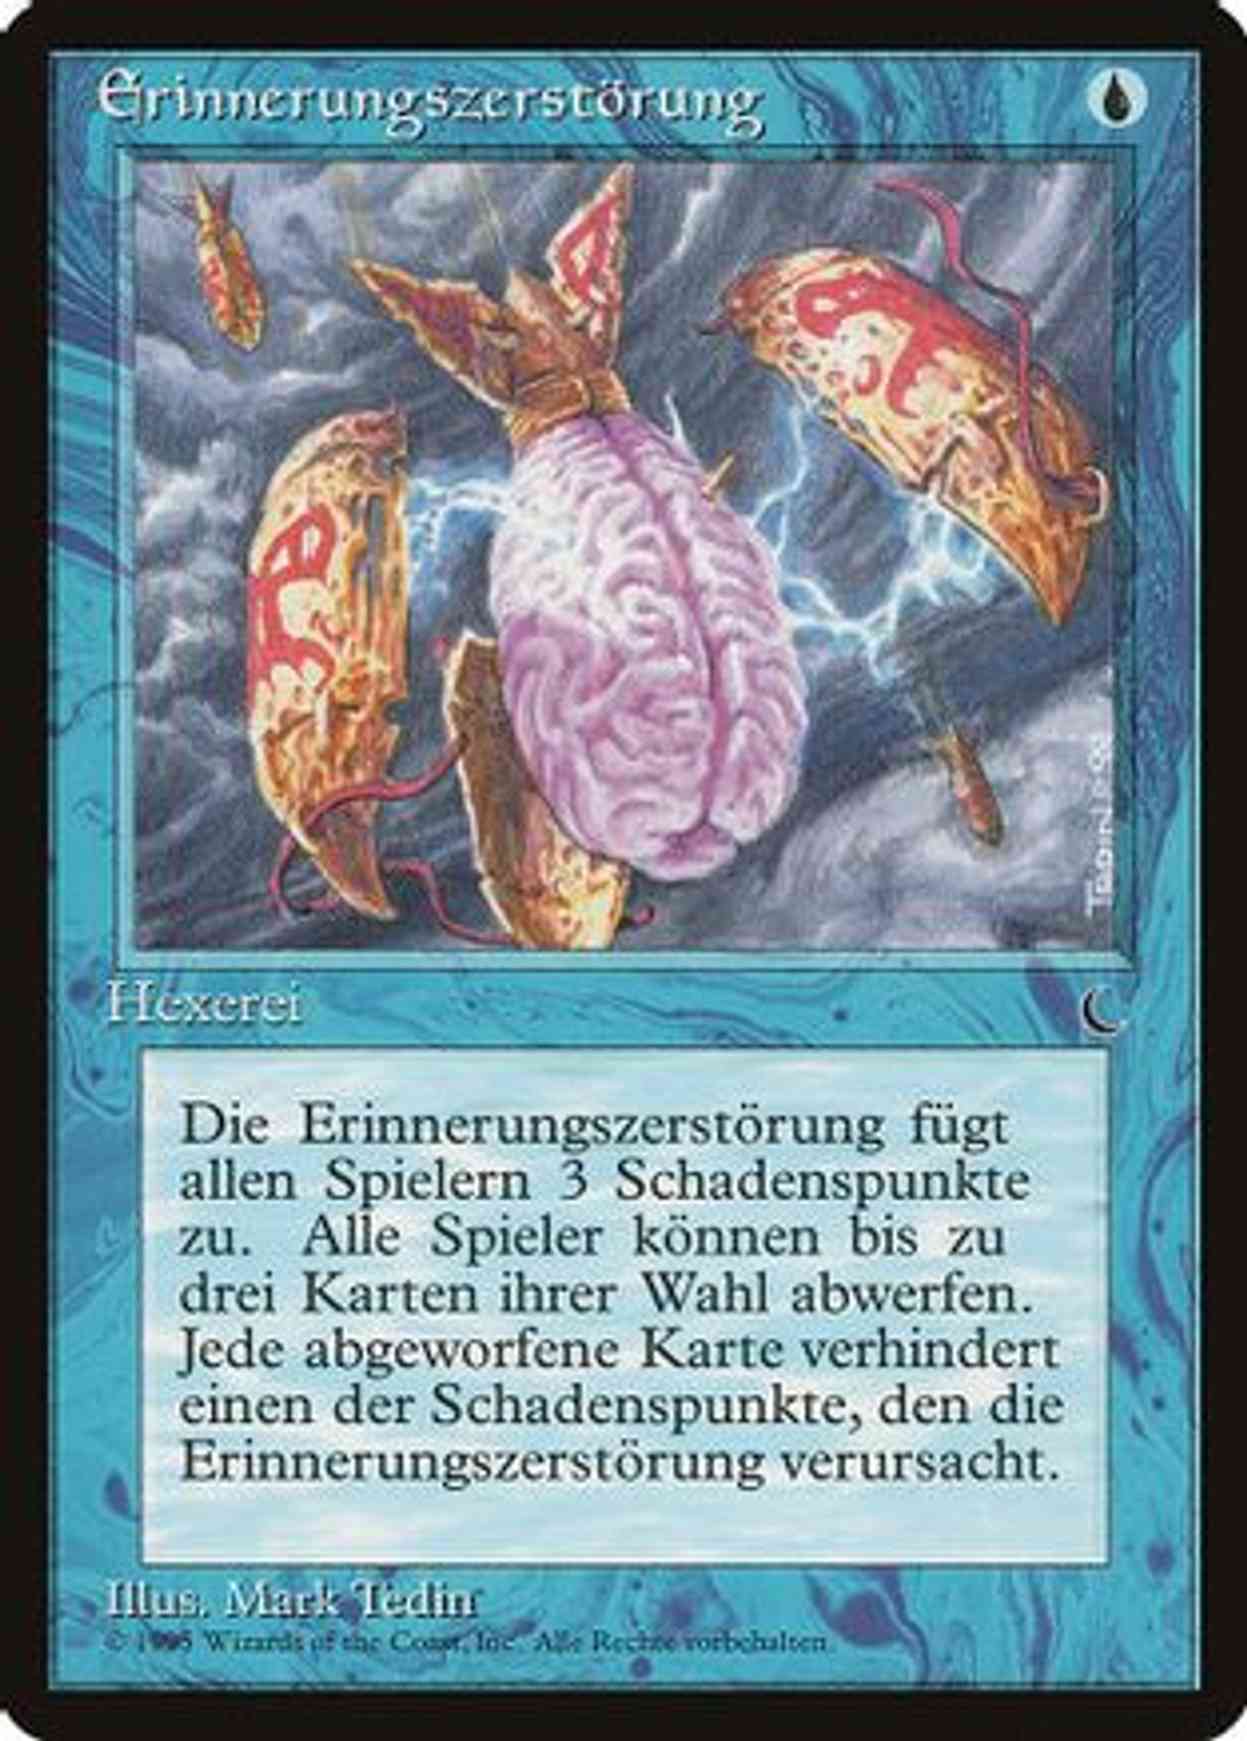 Mind Bomb (German) - "Erinnerungszerstorung" magic card front